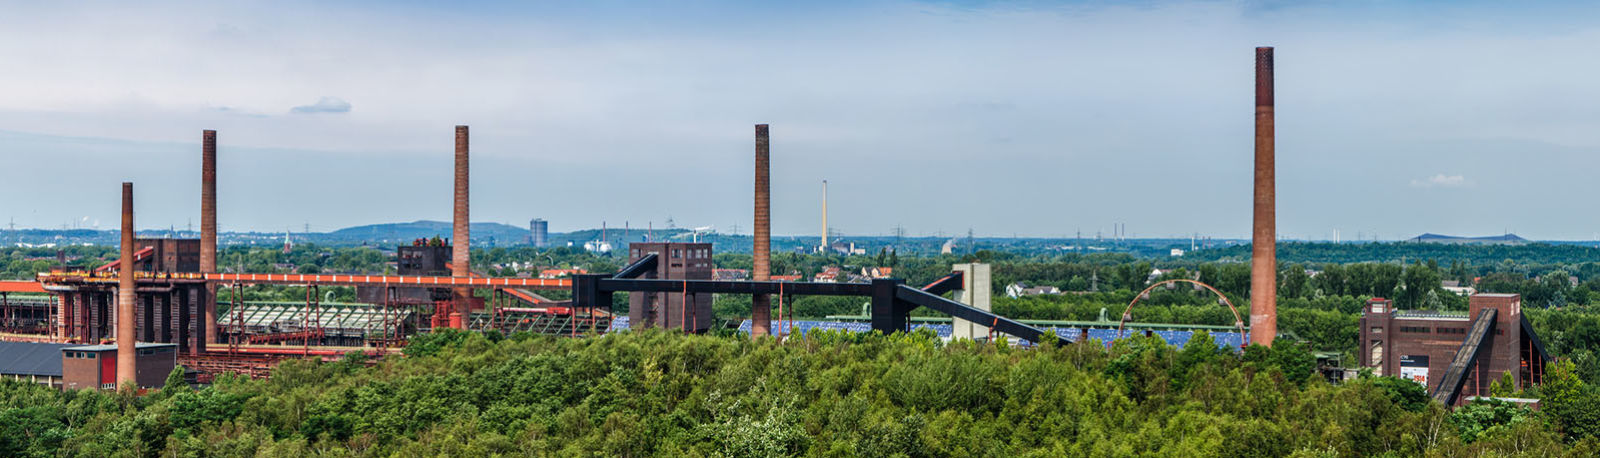 Panorama Kokerei Zeche Zollverein Essen © dietwalther, Fotolia